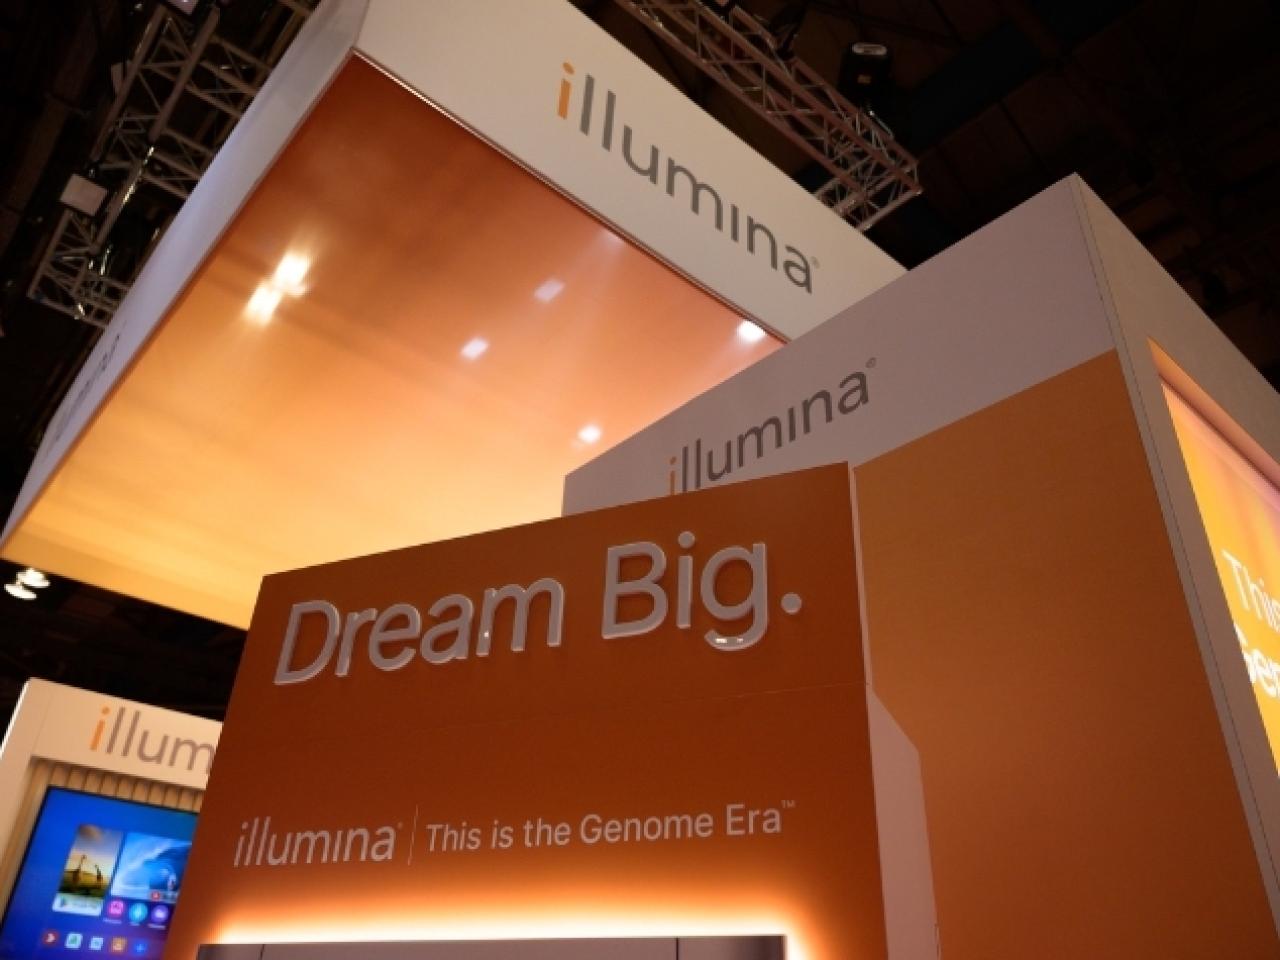 Illumina at Dream Big